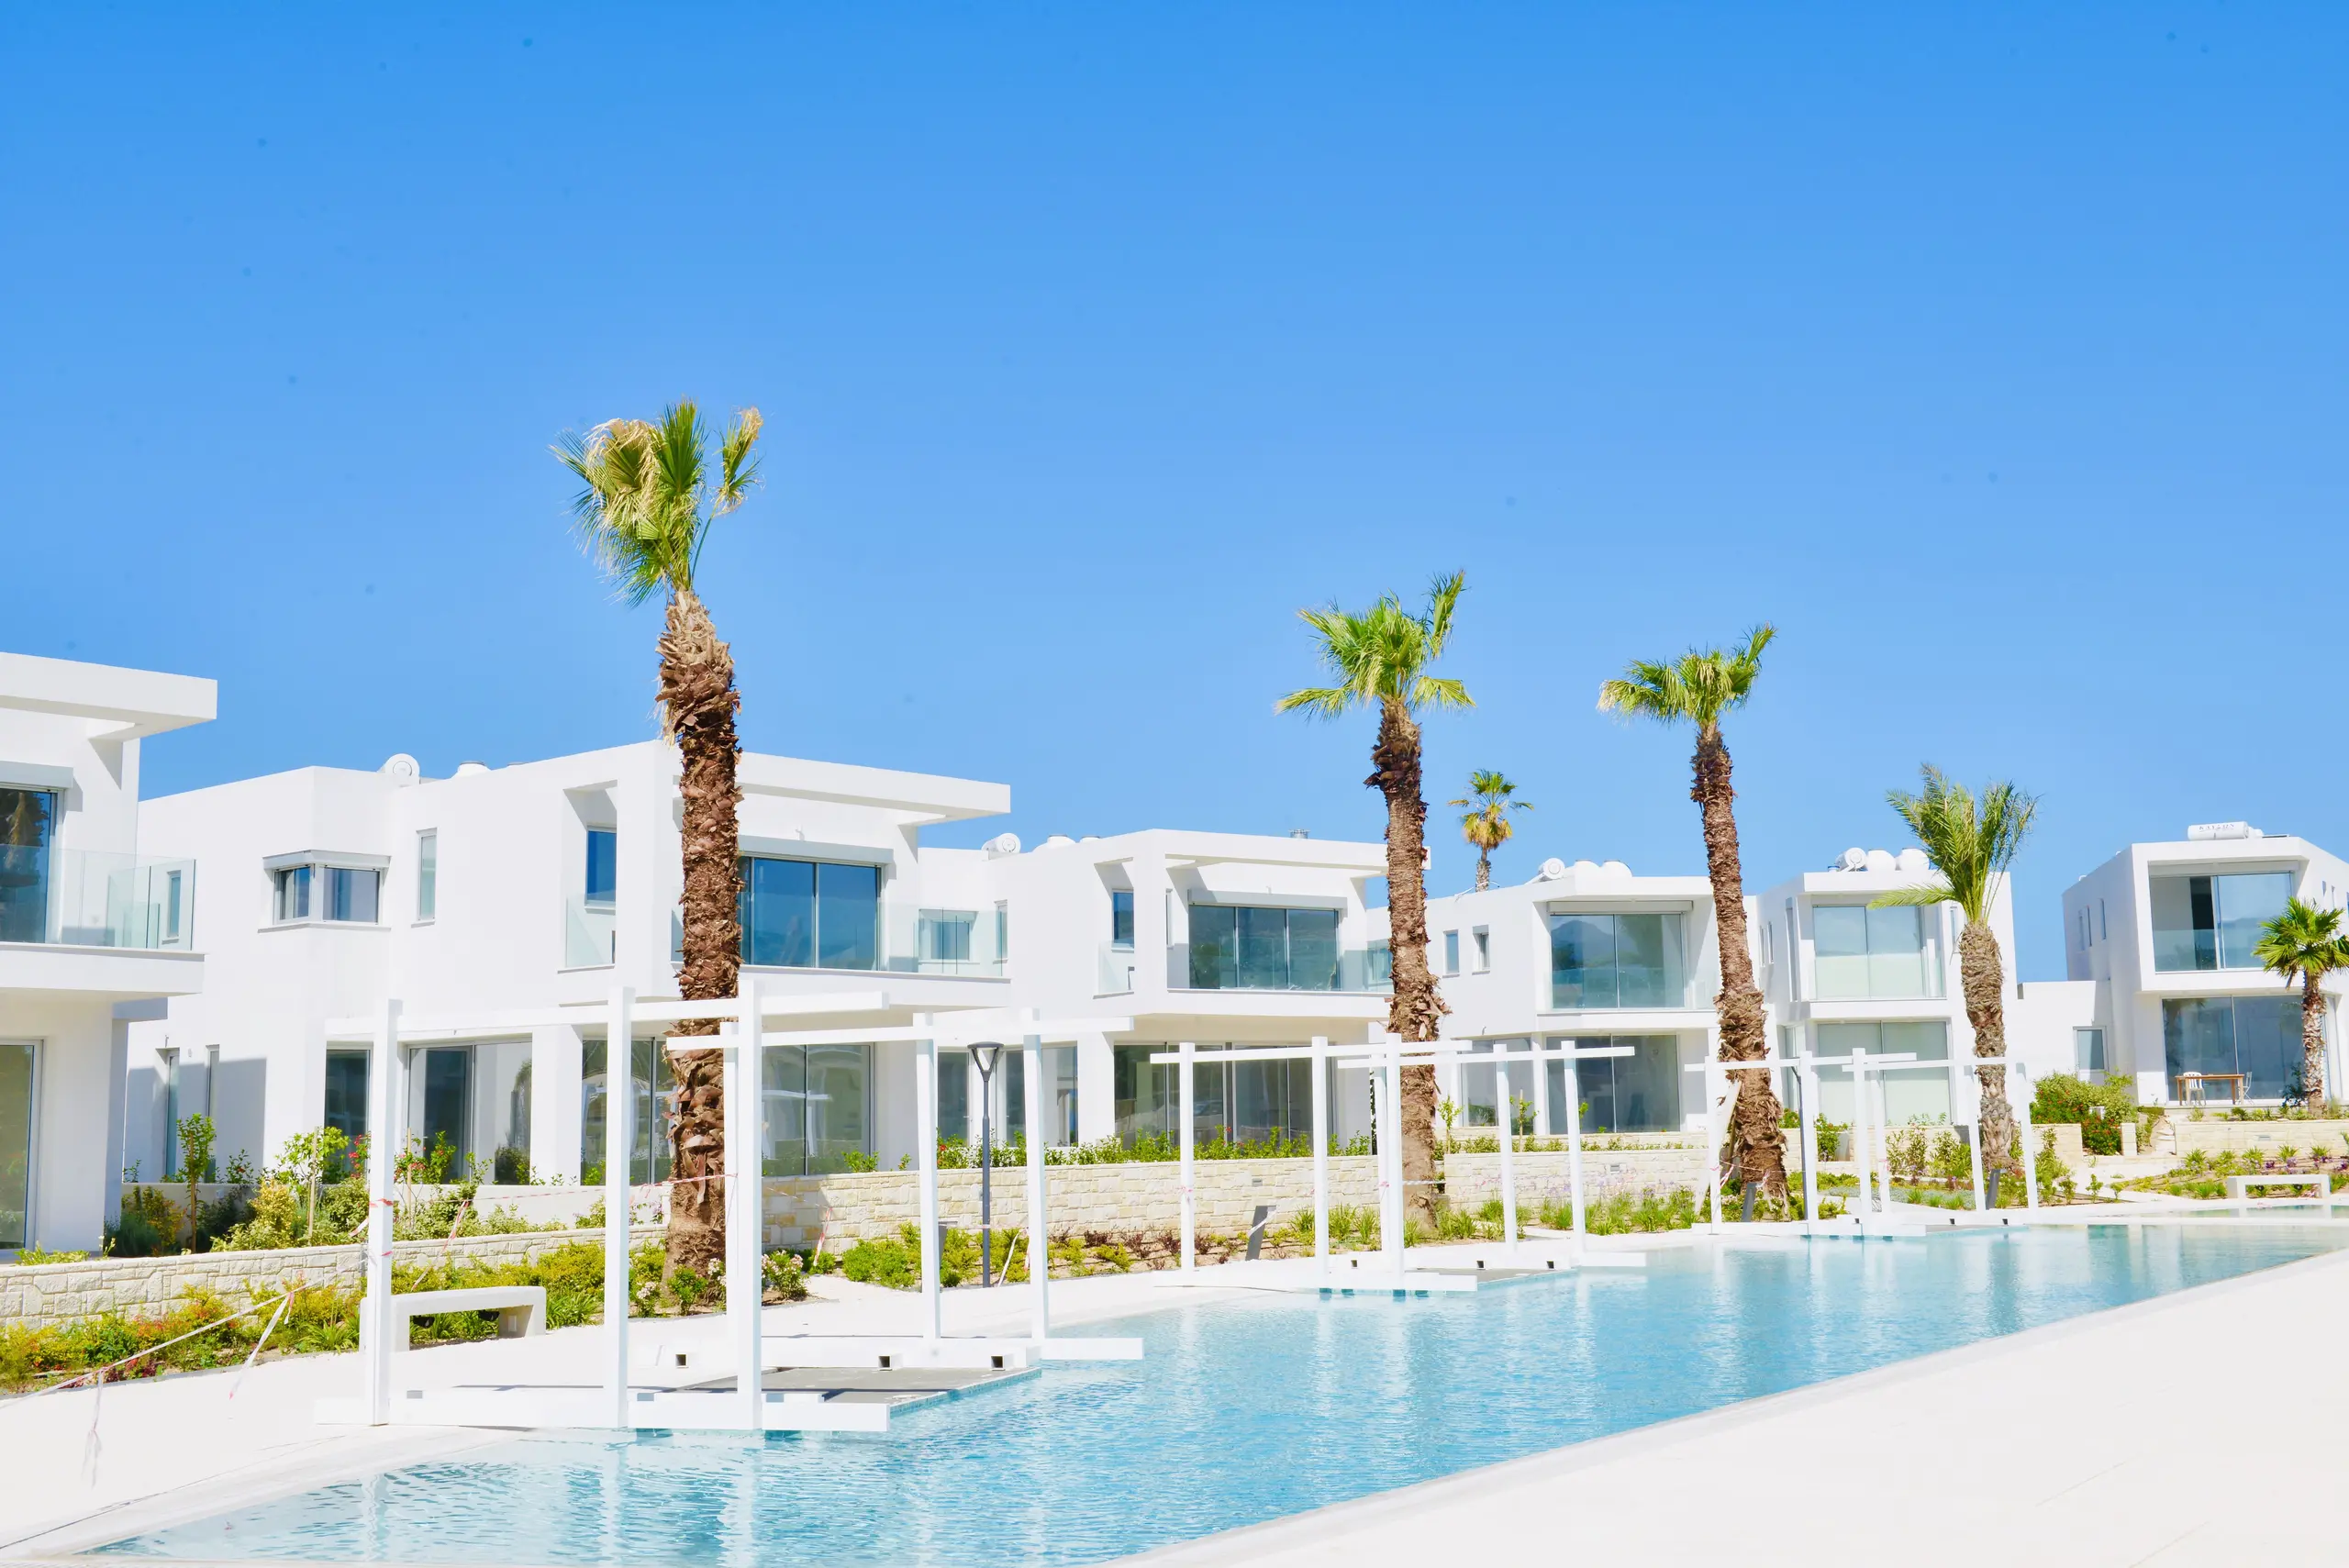 Acropolis Homes - Coral Seas Villas - Real Estate Agency - Real Estate Photo - Estate Development